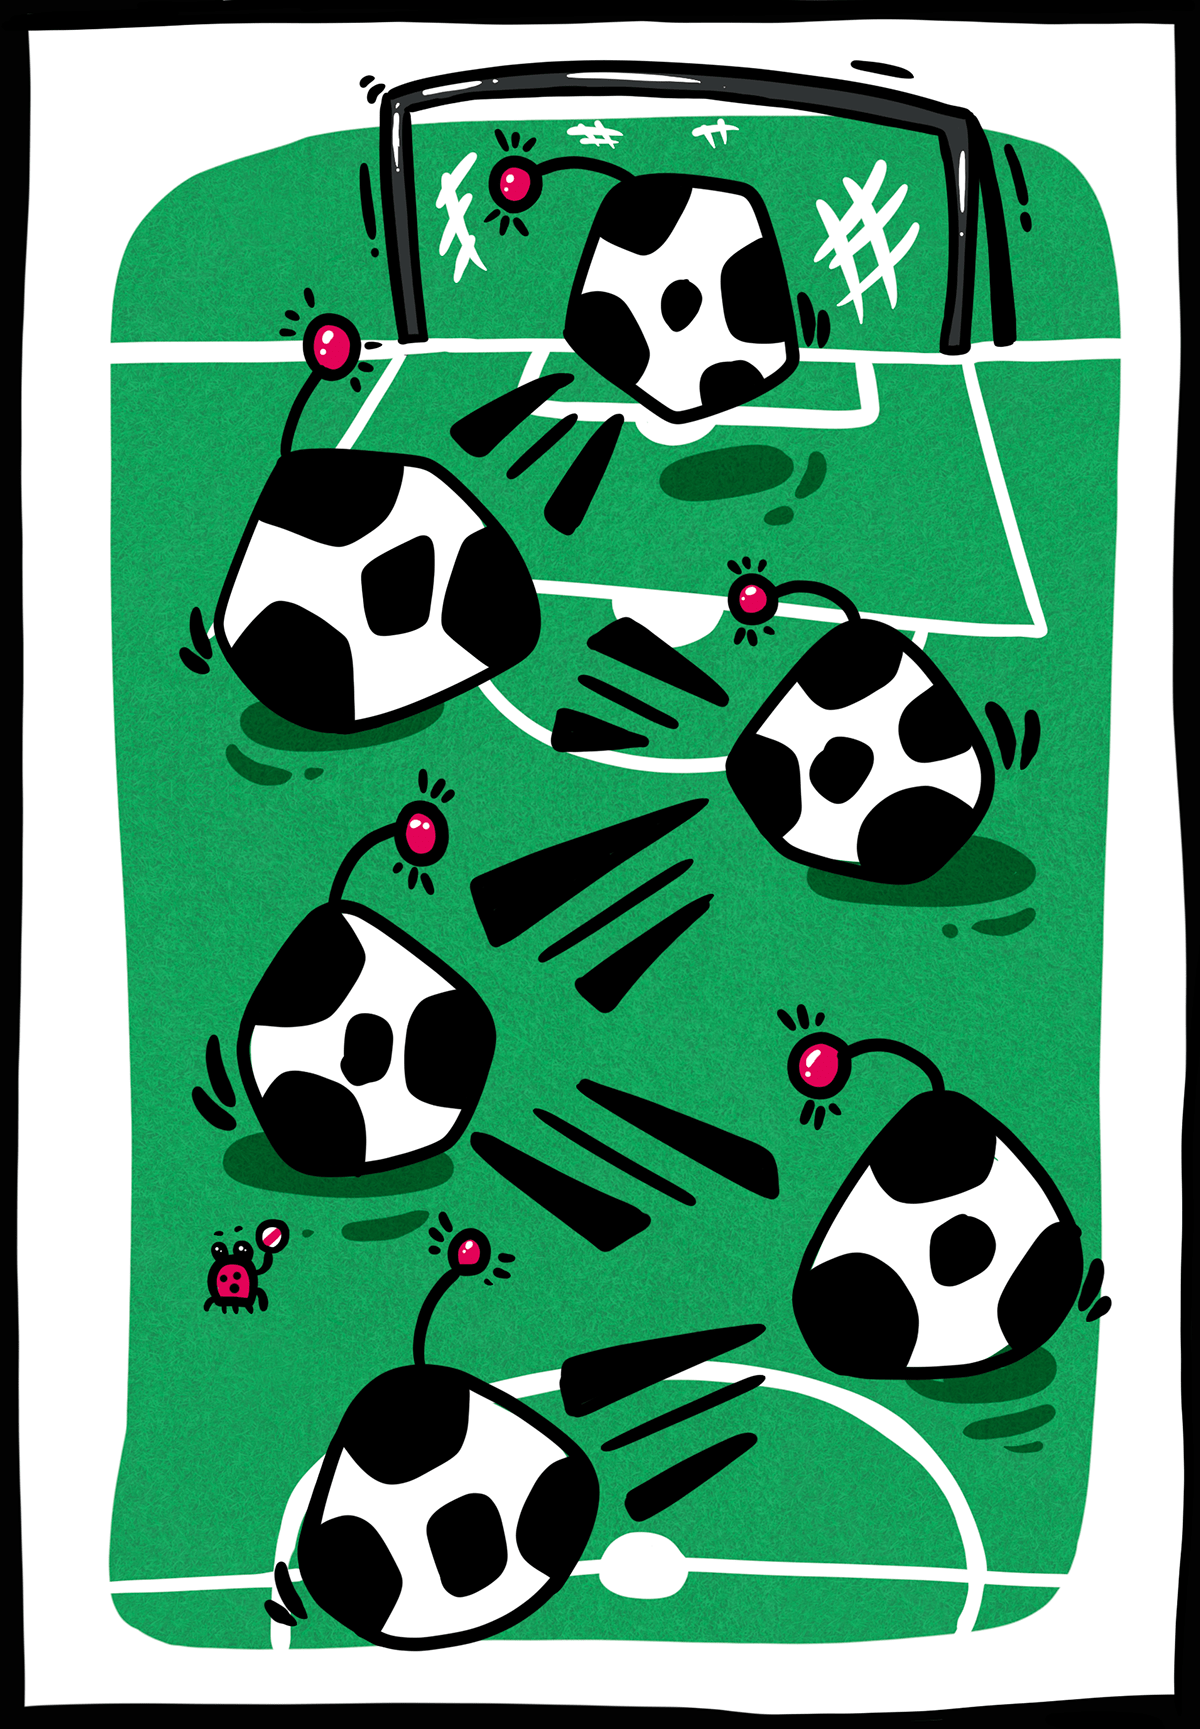 Image may contain: cartoon, ball and soccer